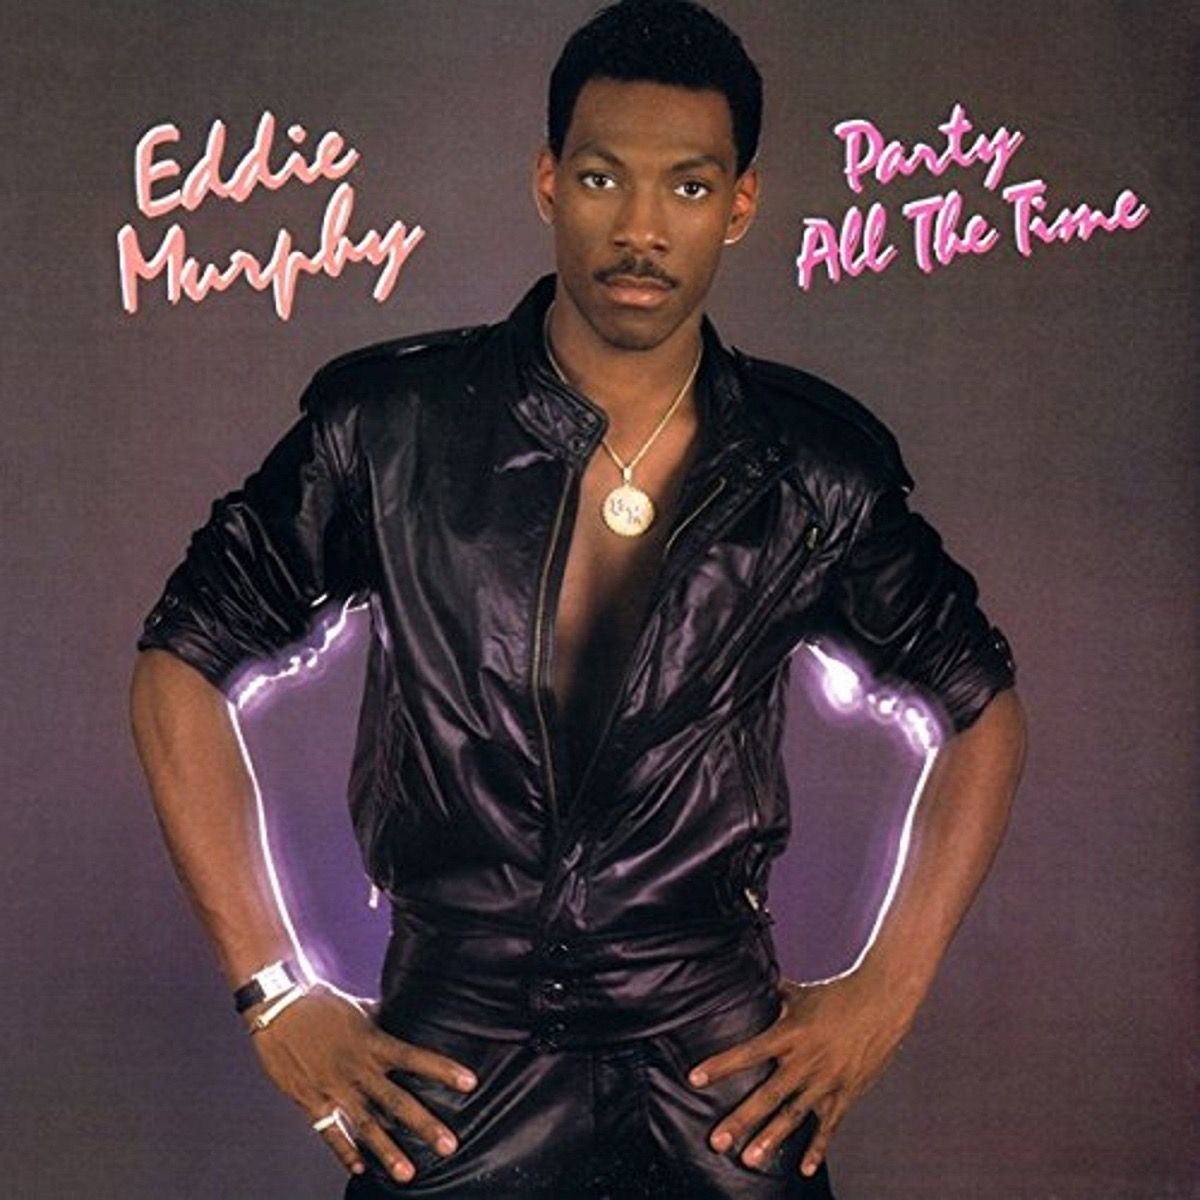 Sampul album Eddie Murphy Party Sepanjang Waktu